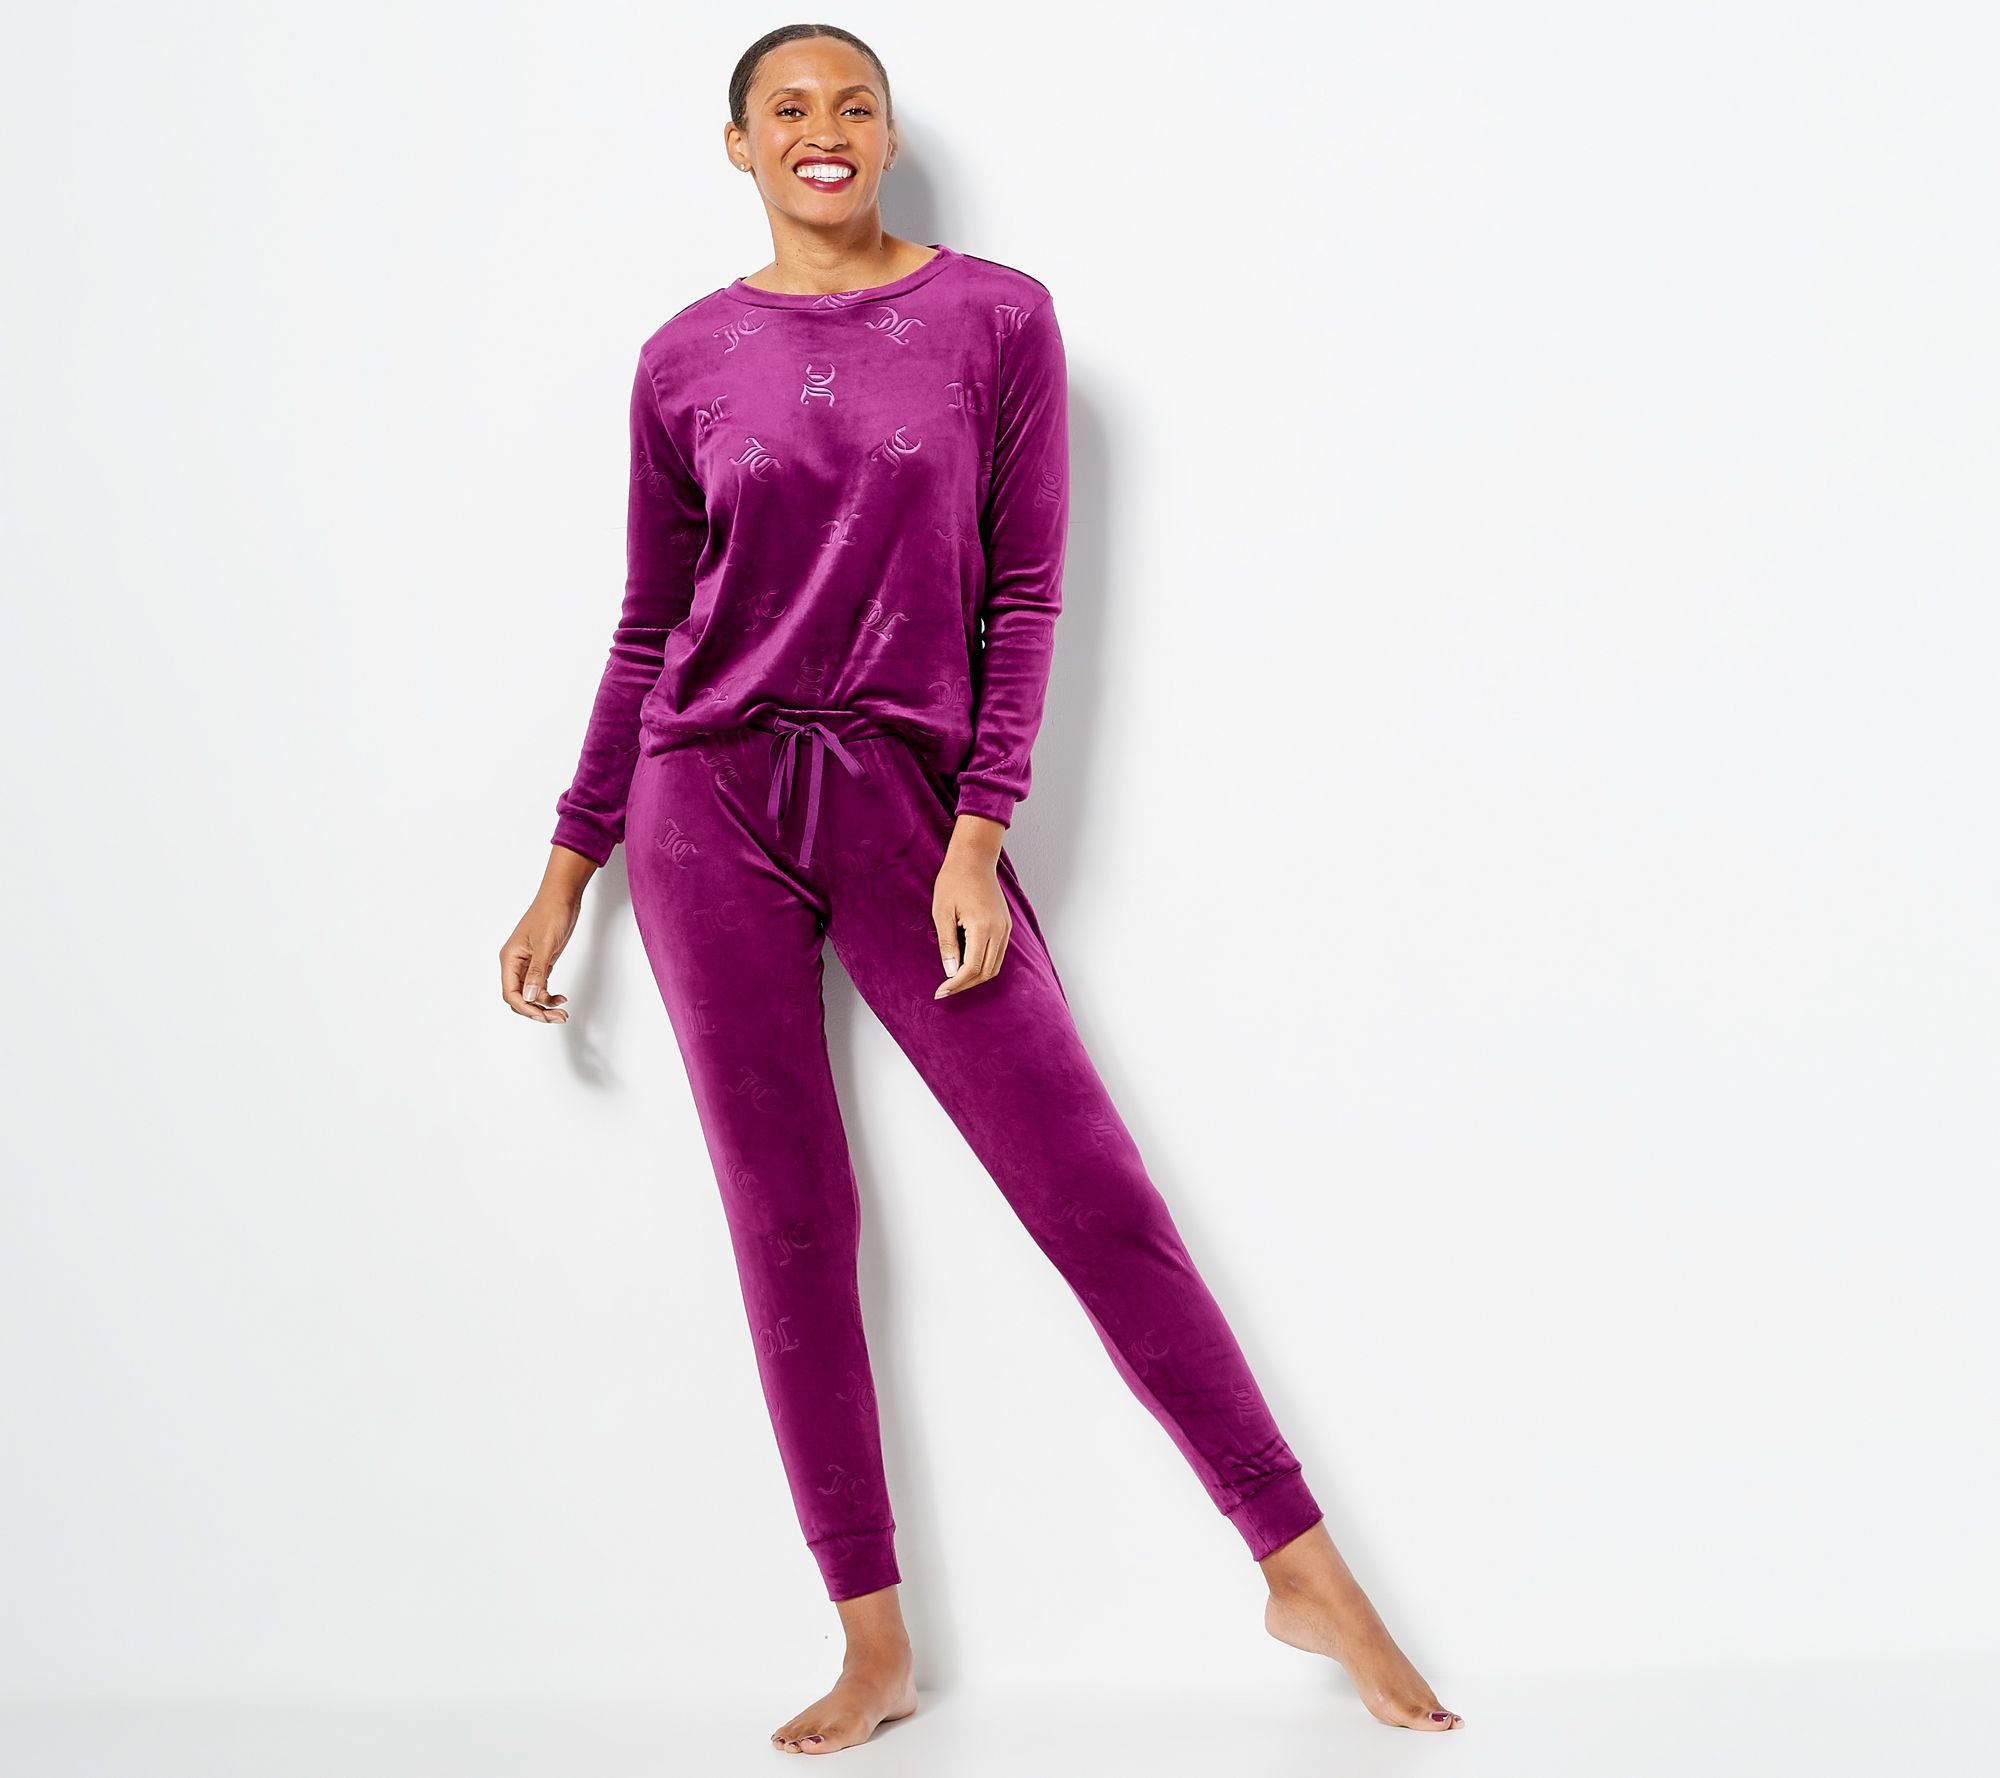 Juicy Couture 2-piece Logo Tee & Pants Pajama Set in Pink